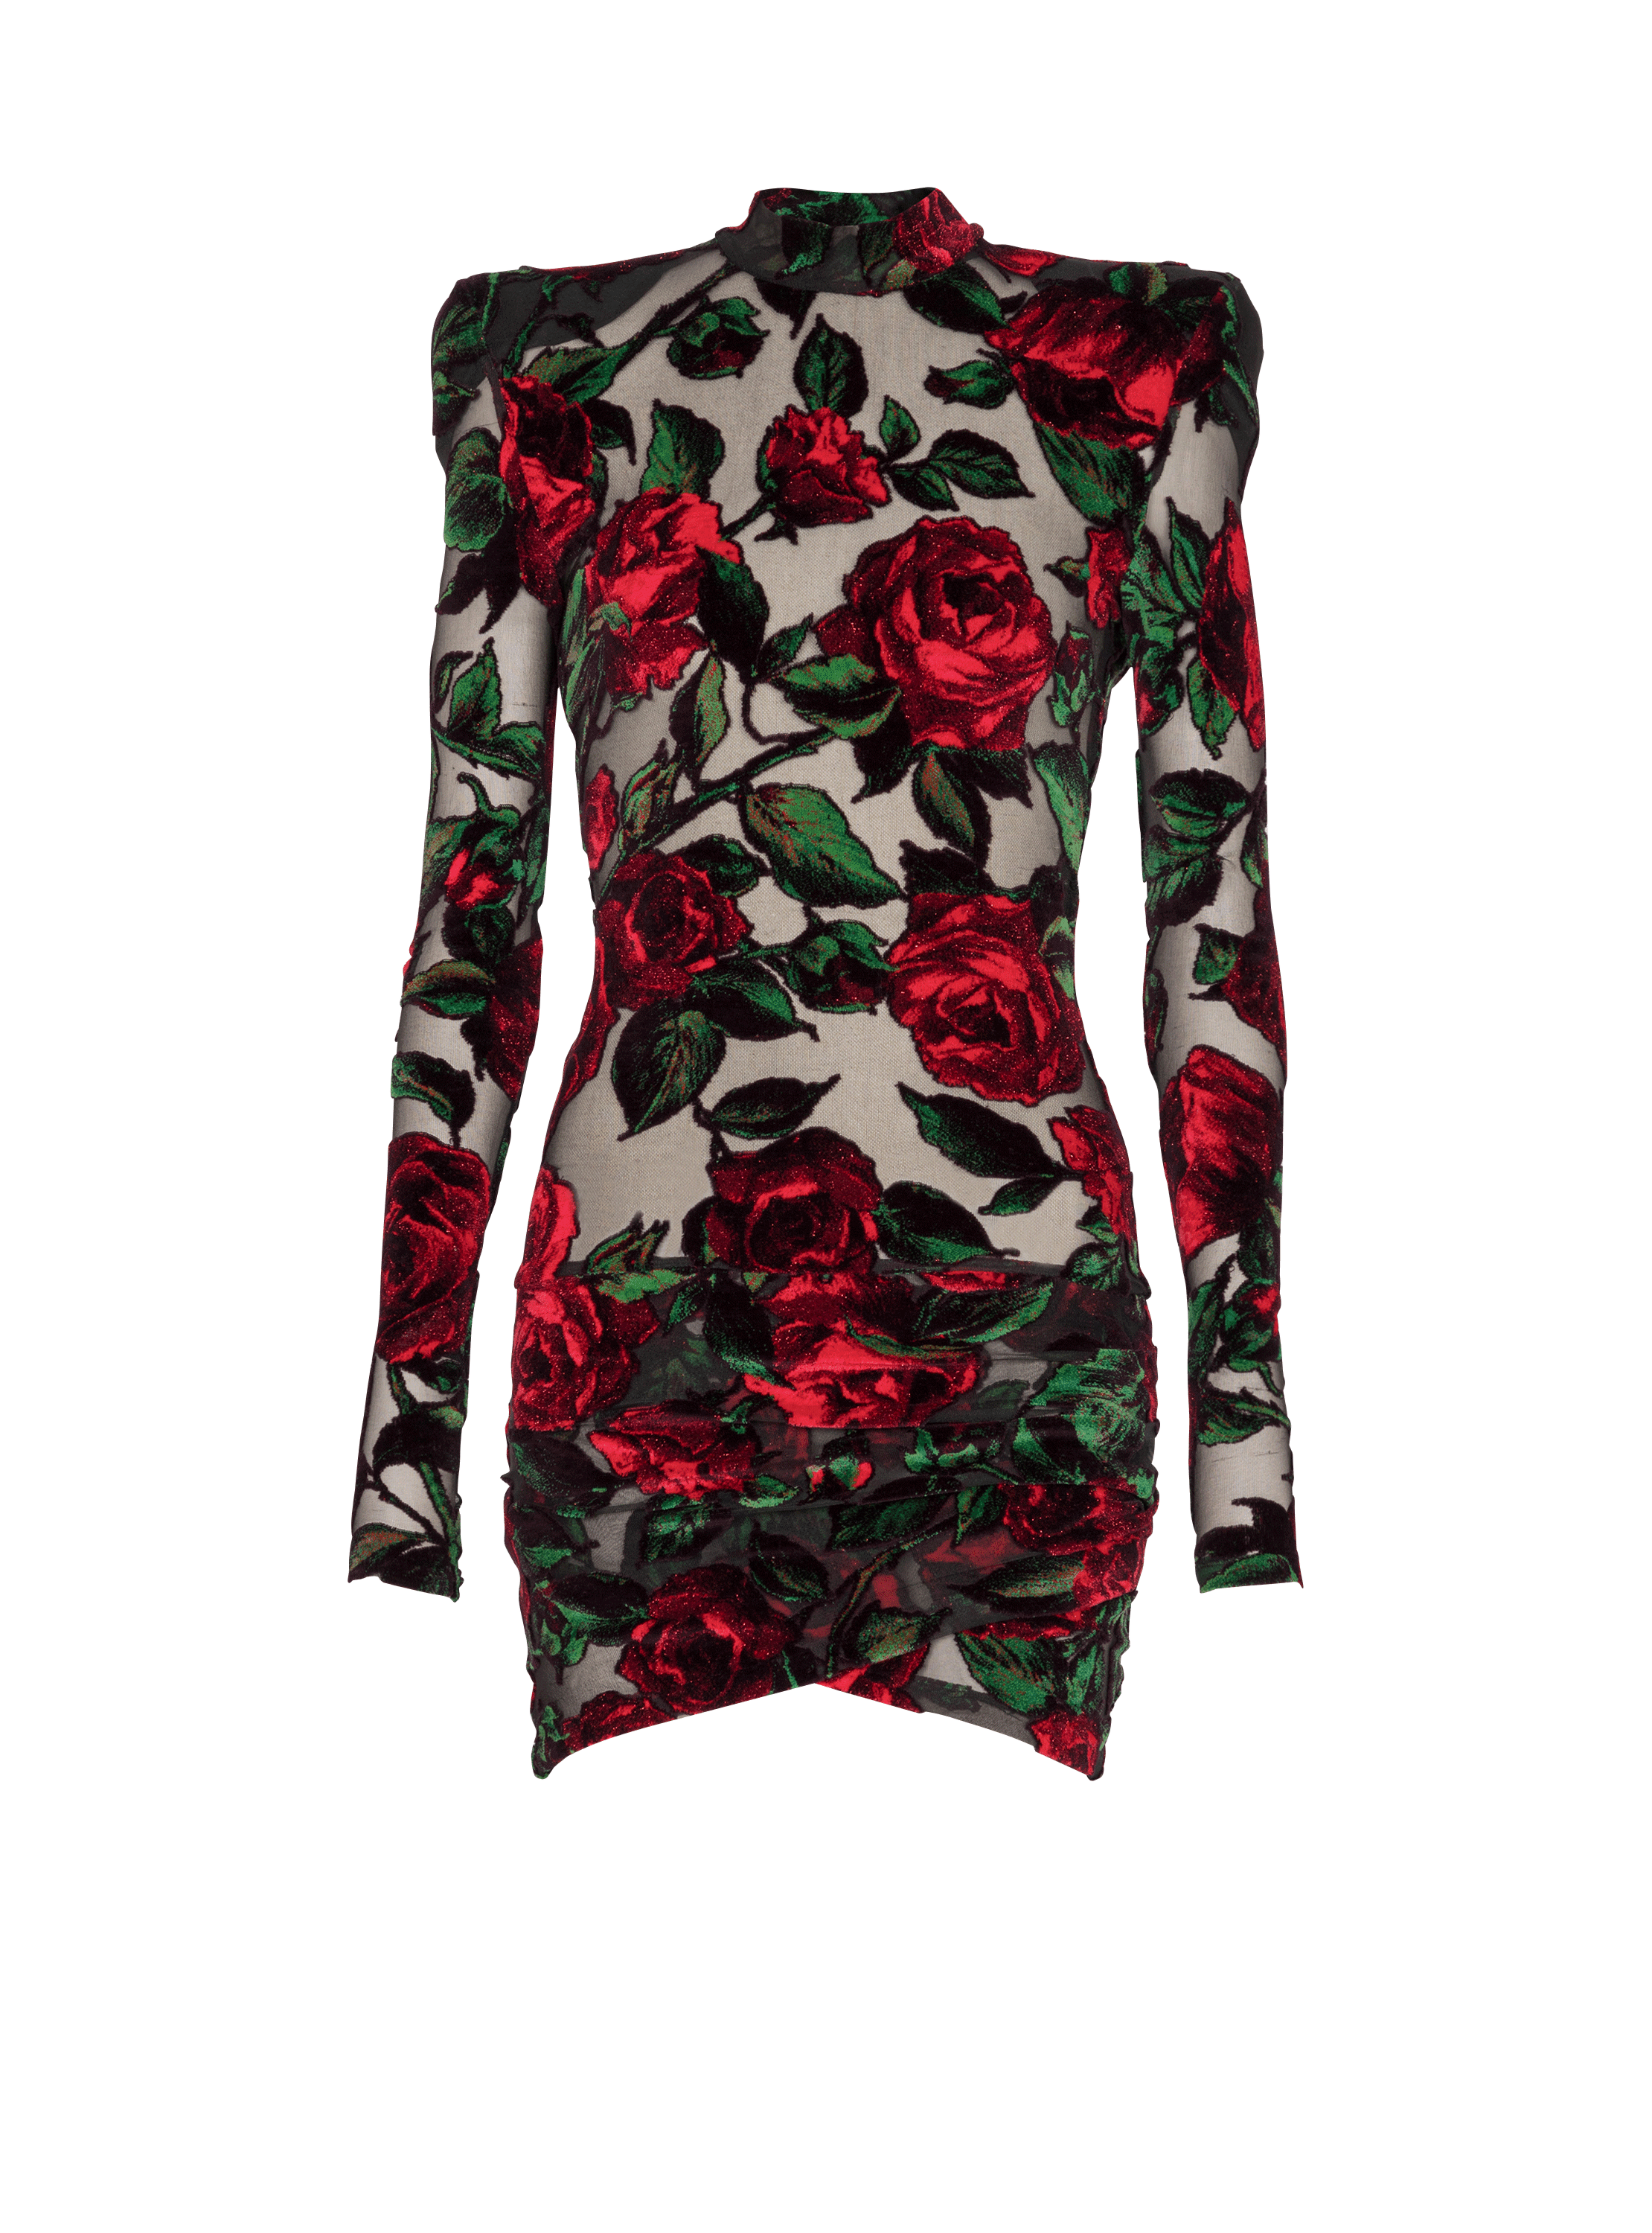 Burnout velvet dress with Rose print 